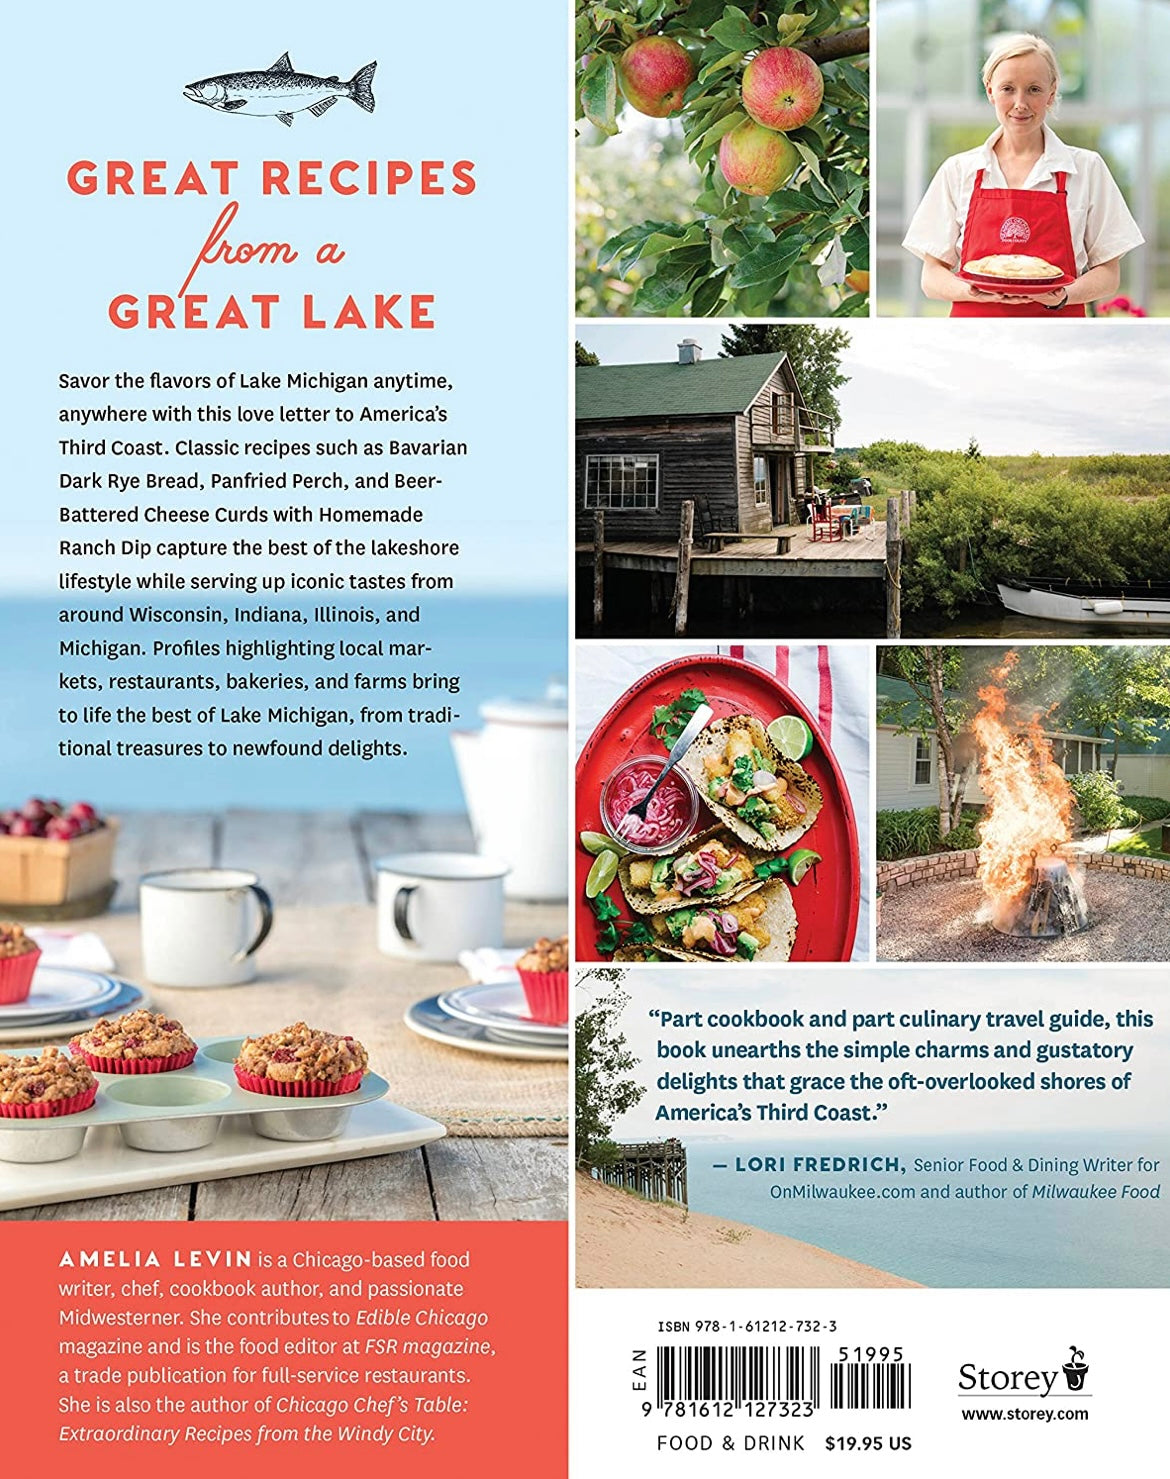 Lake Michigan Cottage Cookbook